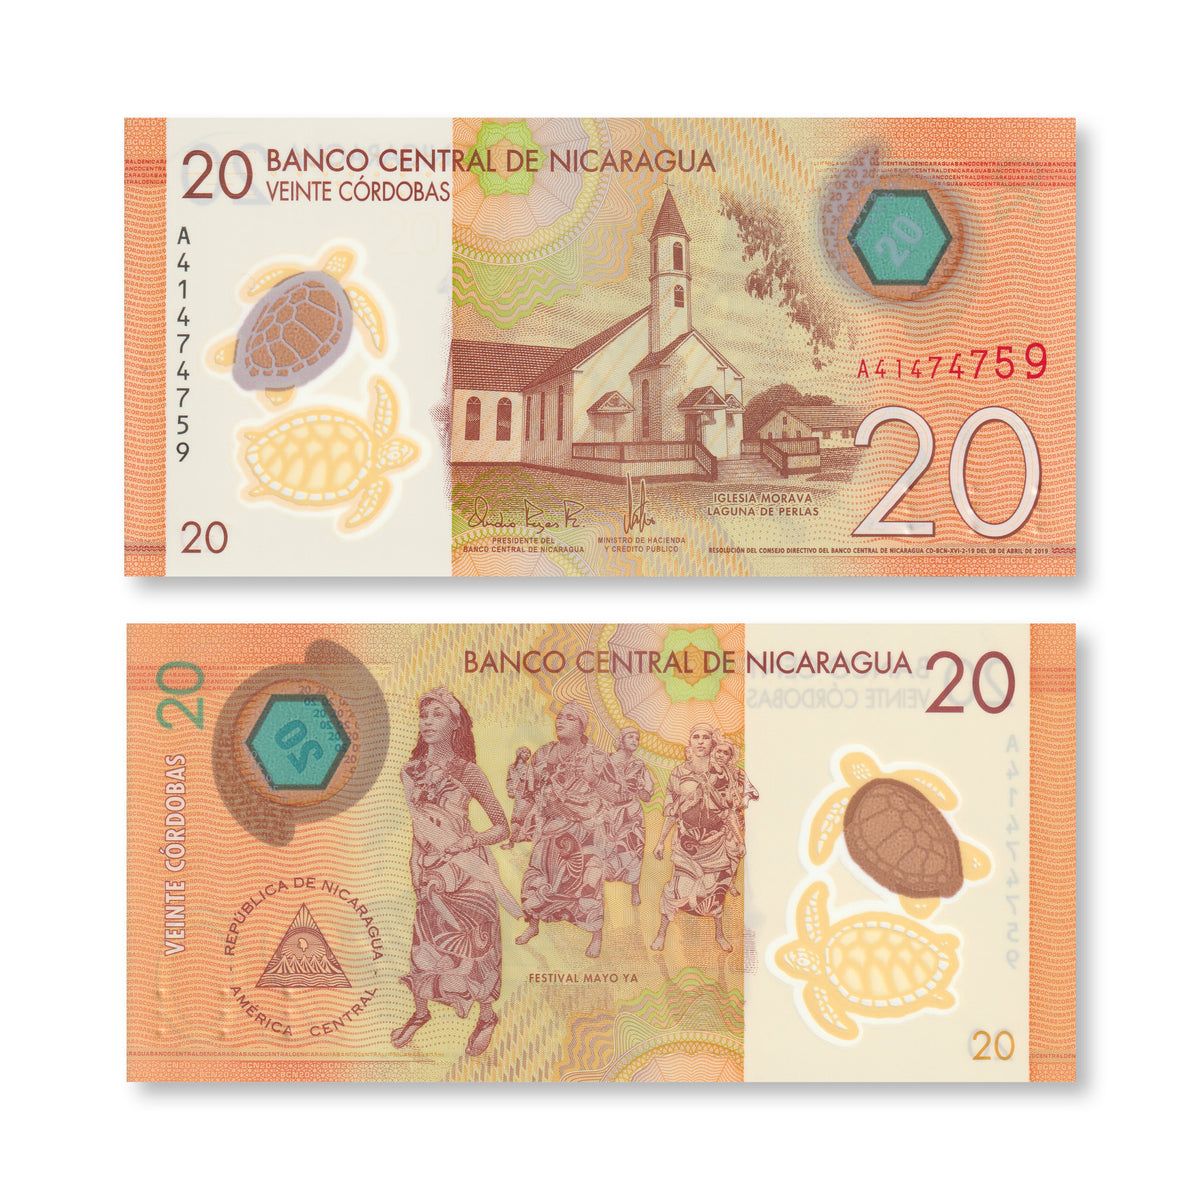 Nicaragua 20 Córdobas, 2019, B507b, P210, UNC - Robert's World Money - World Banknotes